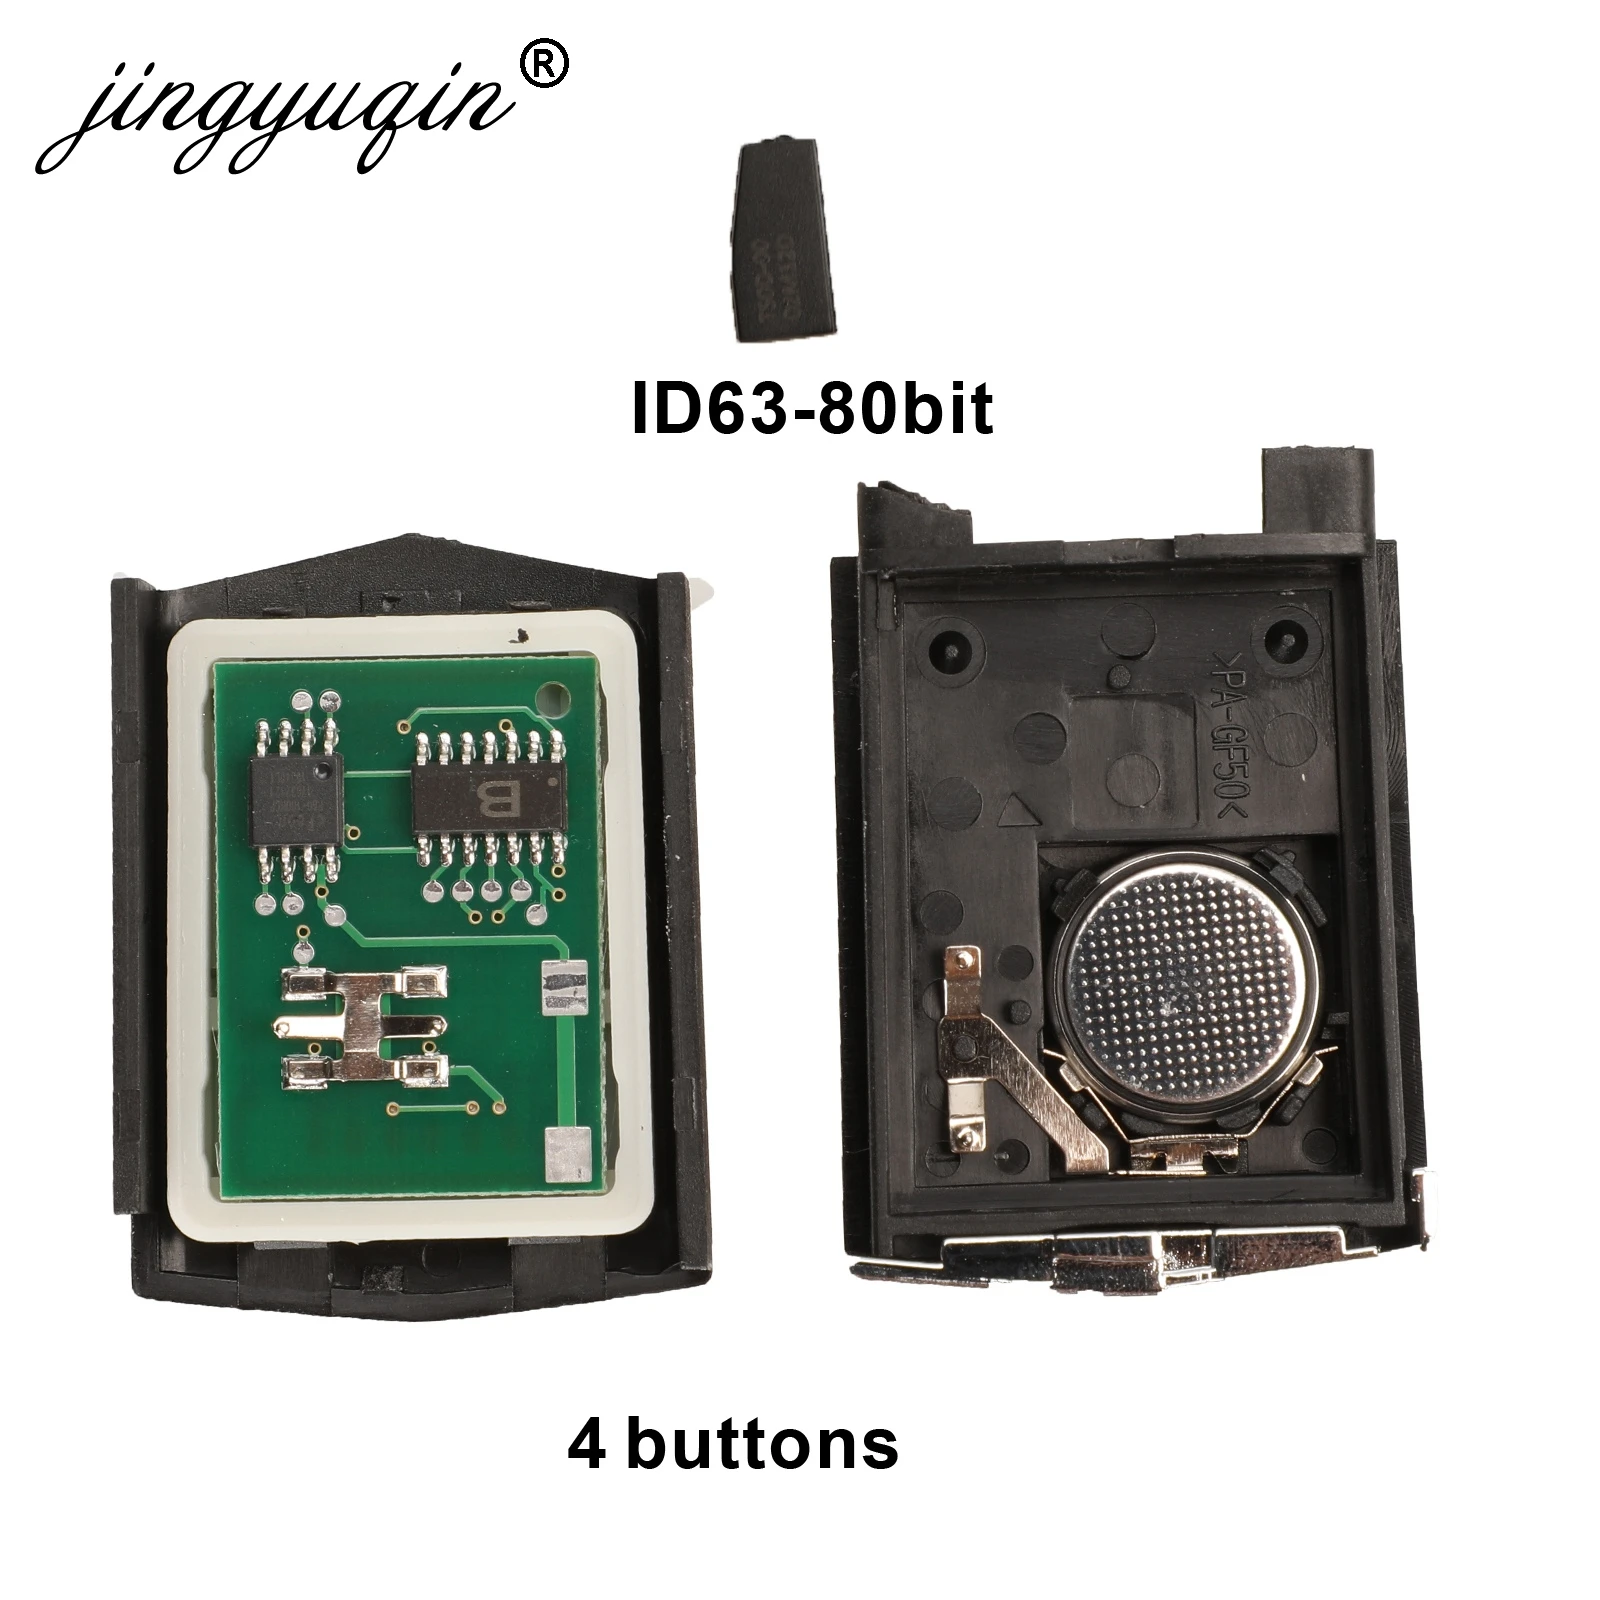 jingyuqin 3/4 Buttons Remote Folding Car Key 315Mhz For Mazda 3 5 6 CX-7  CX-9 MX-5 Miata BGBX1T478SKE125-01 4D63 Chip Fob